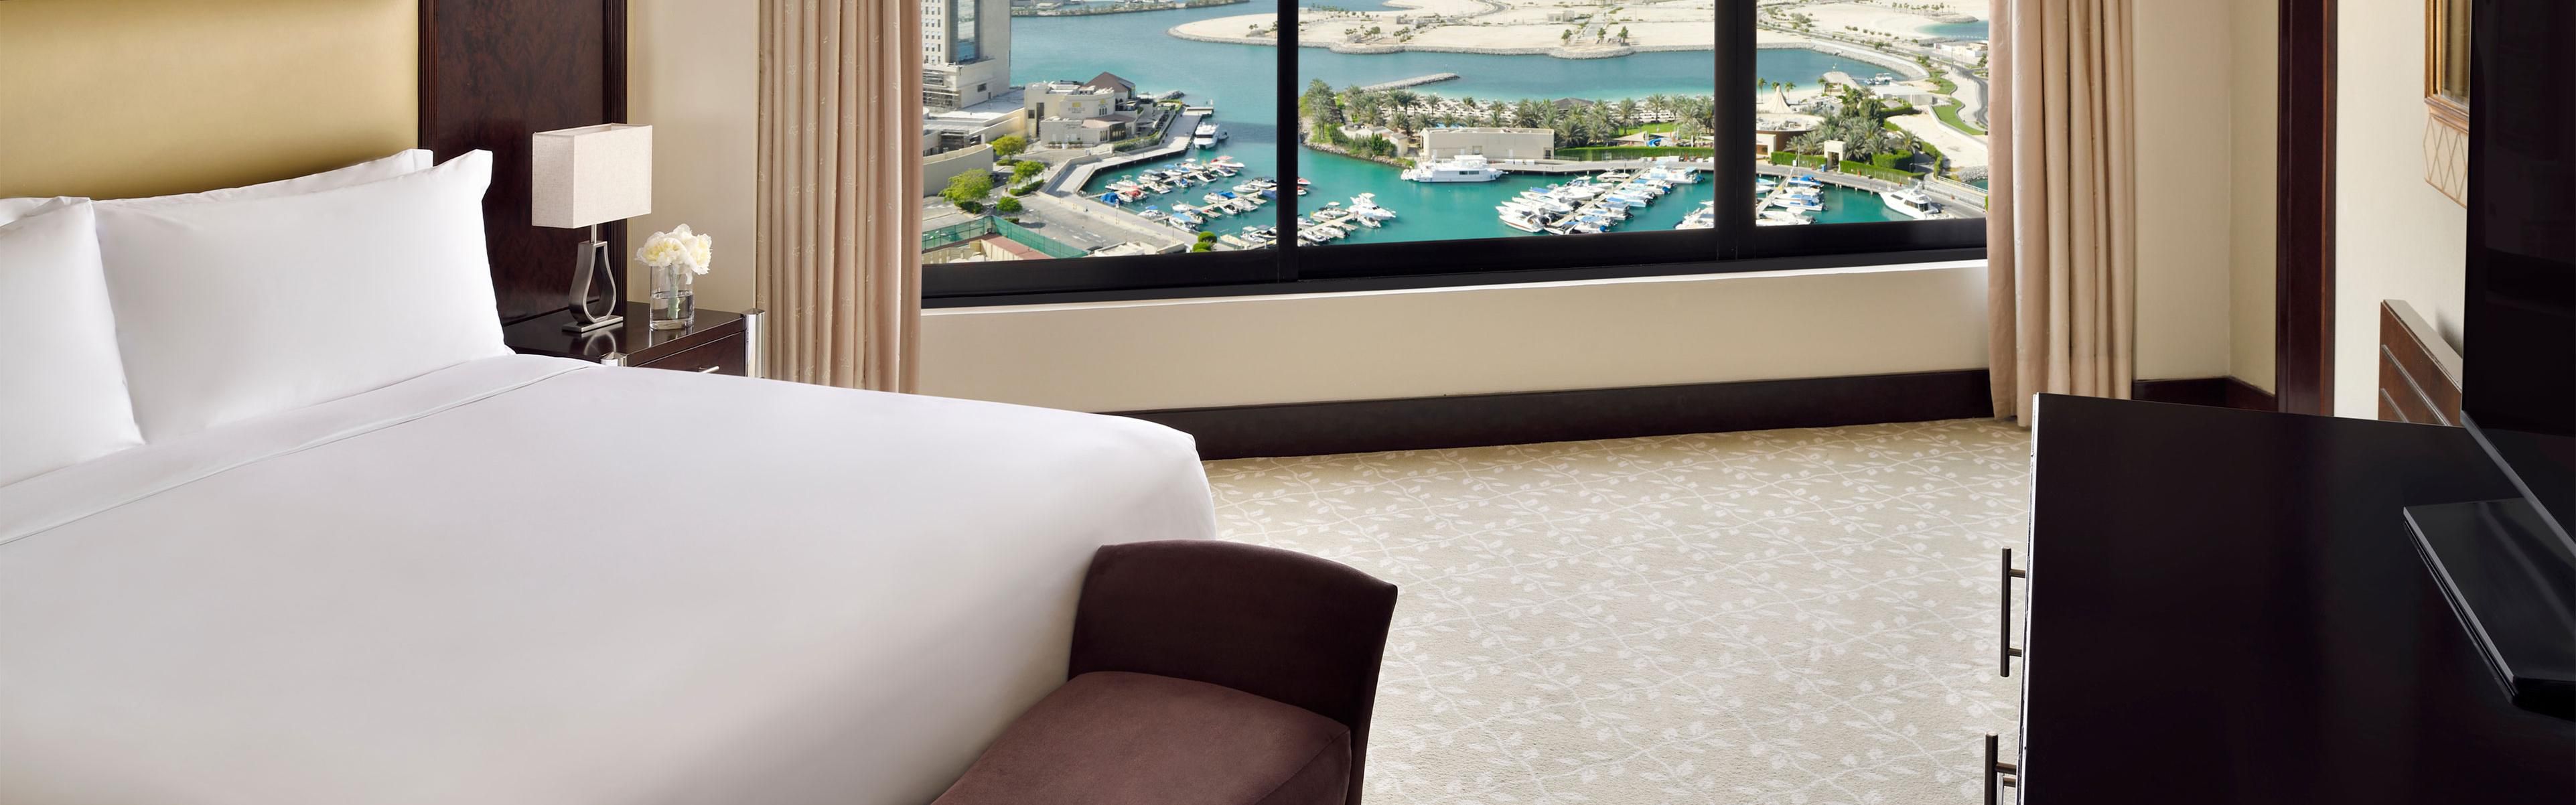 Premium suites amidst views of the Arabian Gulf